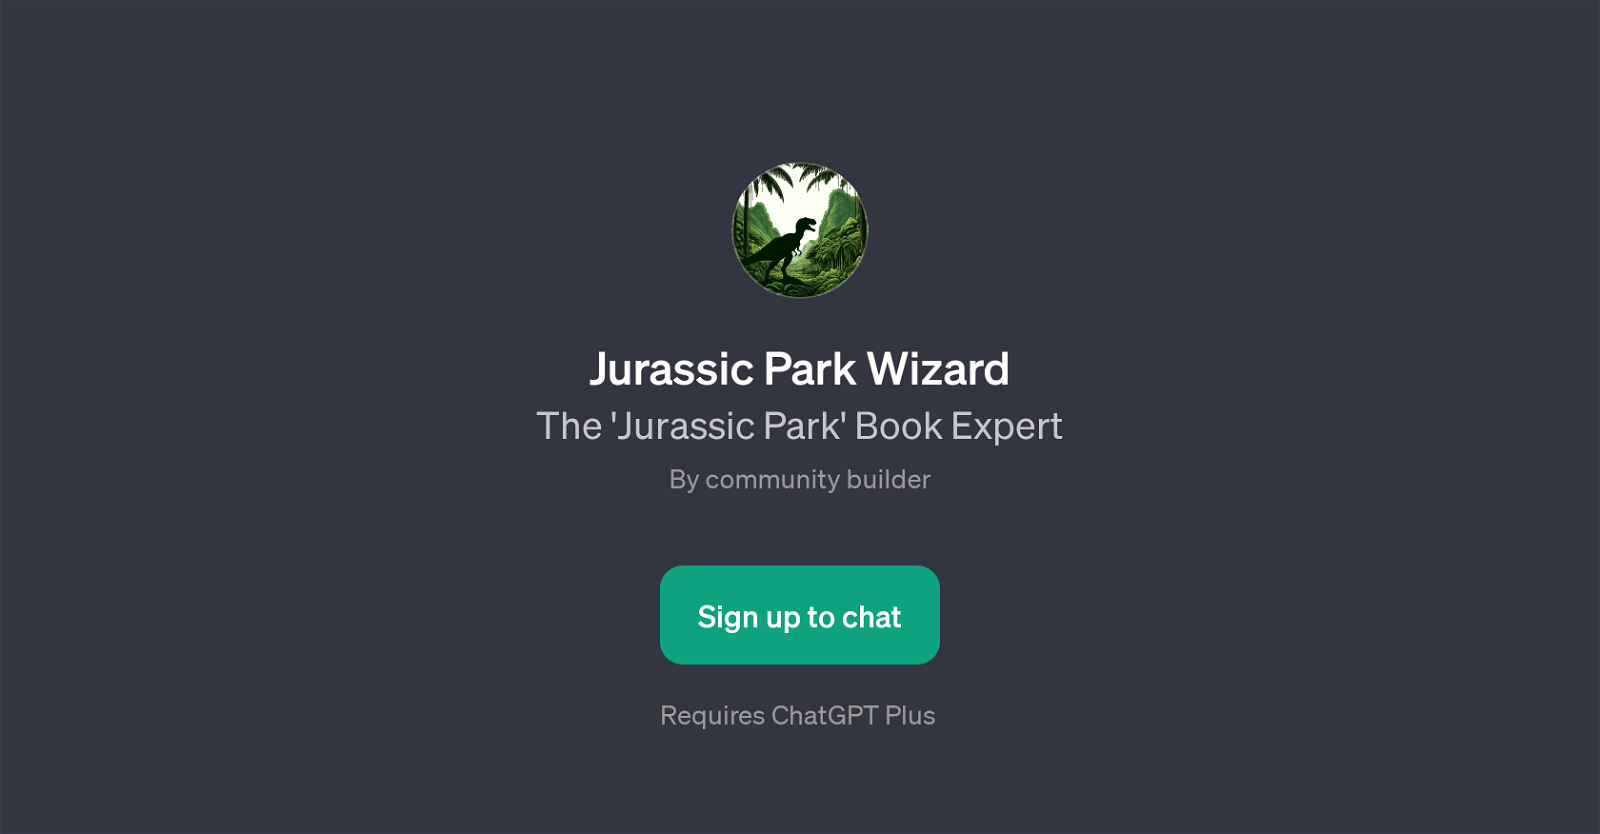 Jurassic Park Wizard website